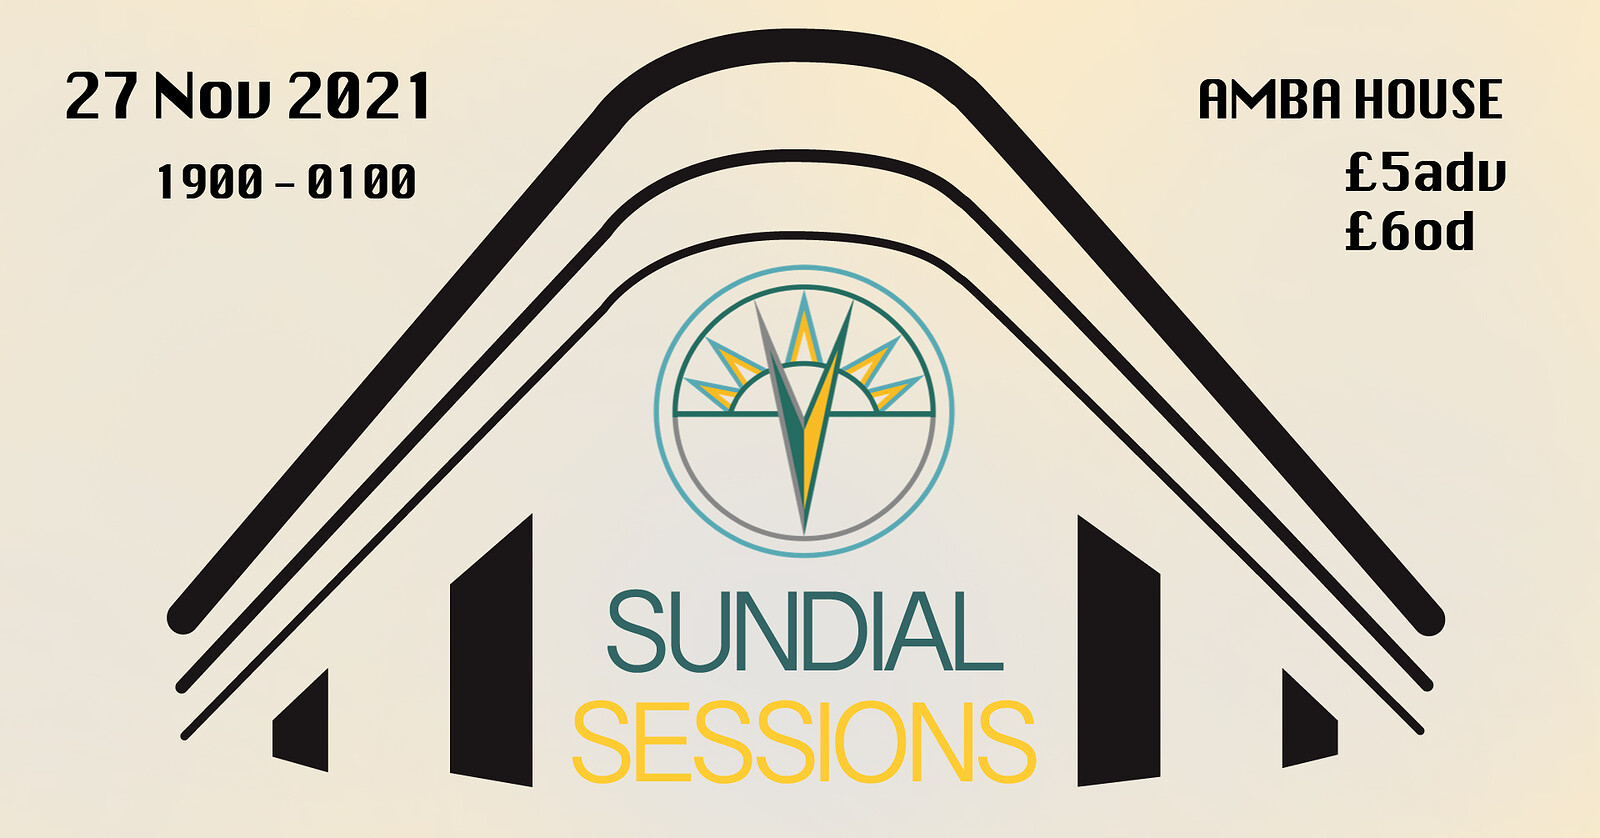 Sundial Sessions at The Sundial Kitchen, Amba House, 1 William Street, Totterdown, BS3 4TU